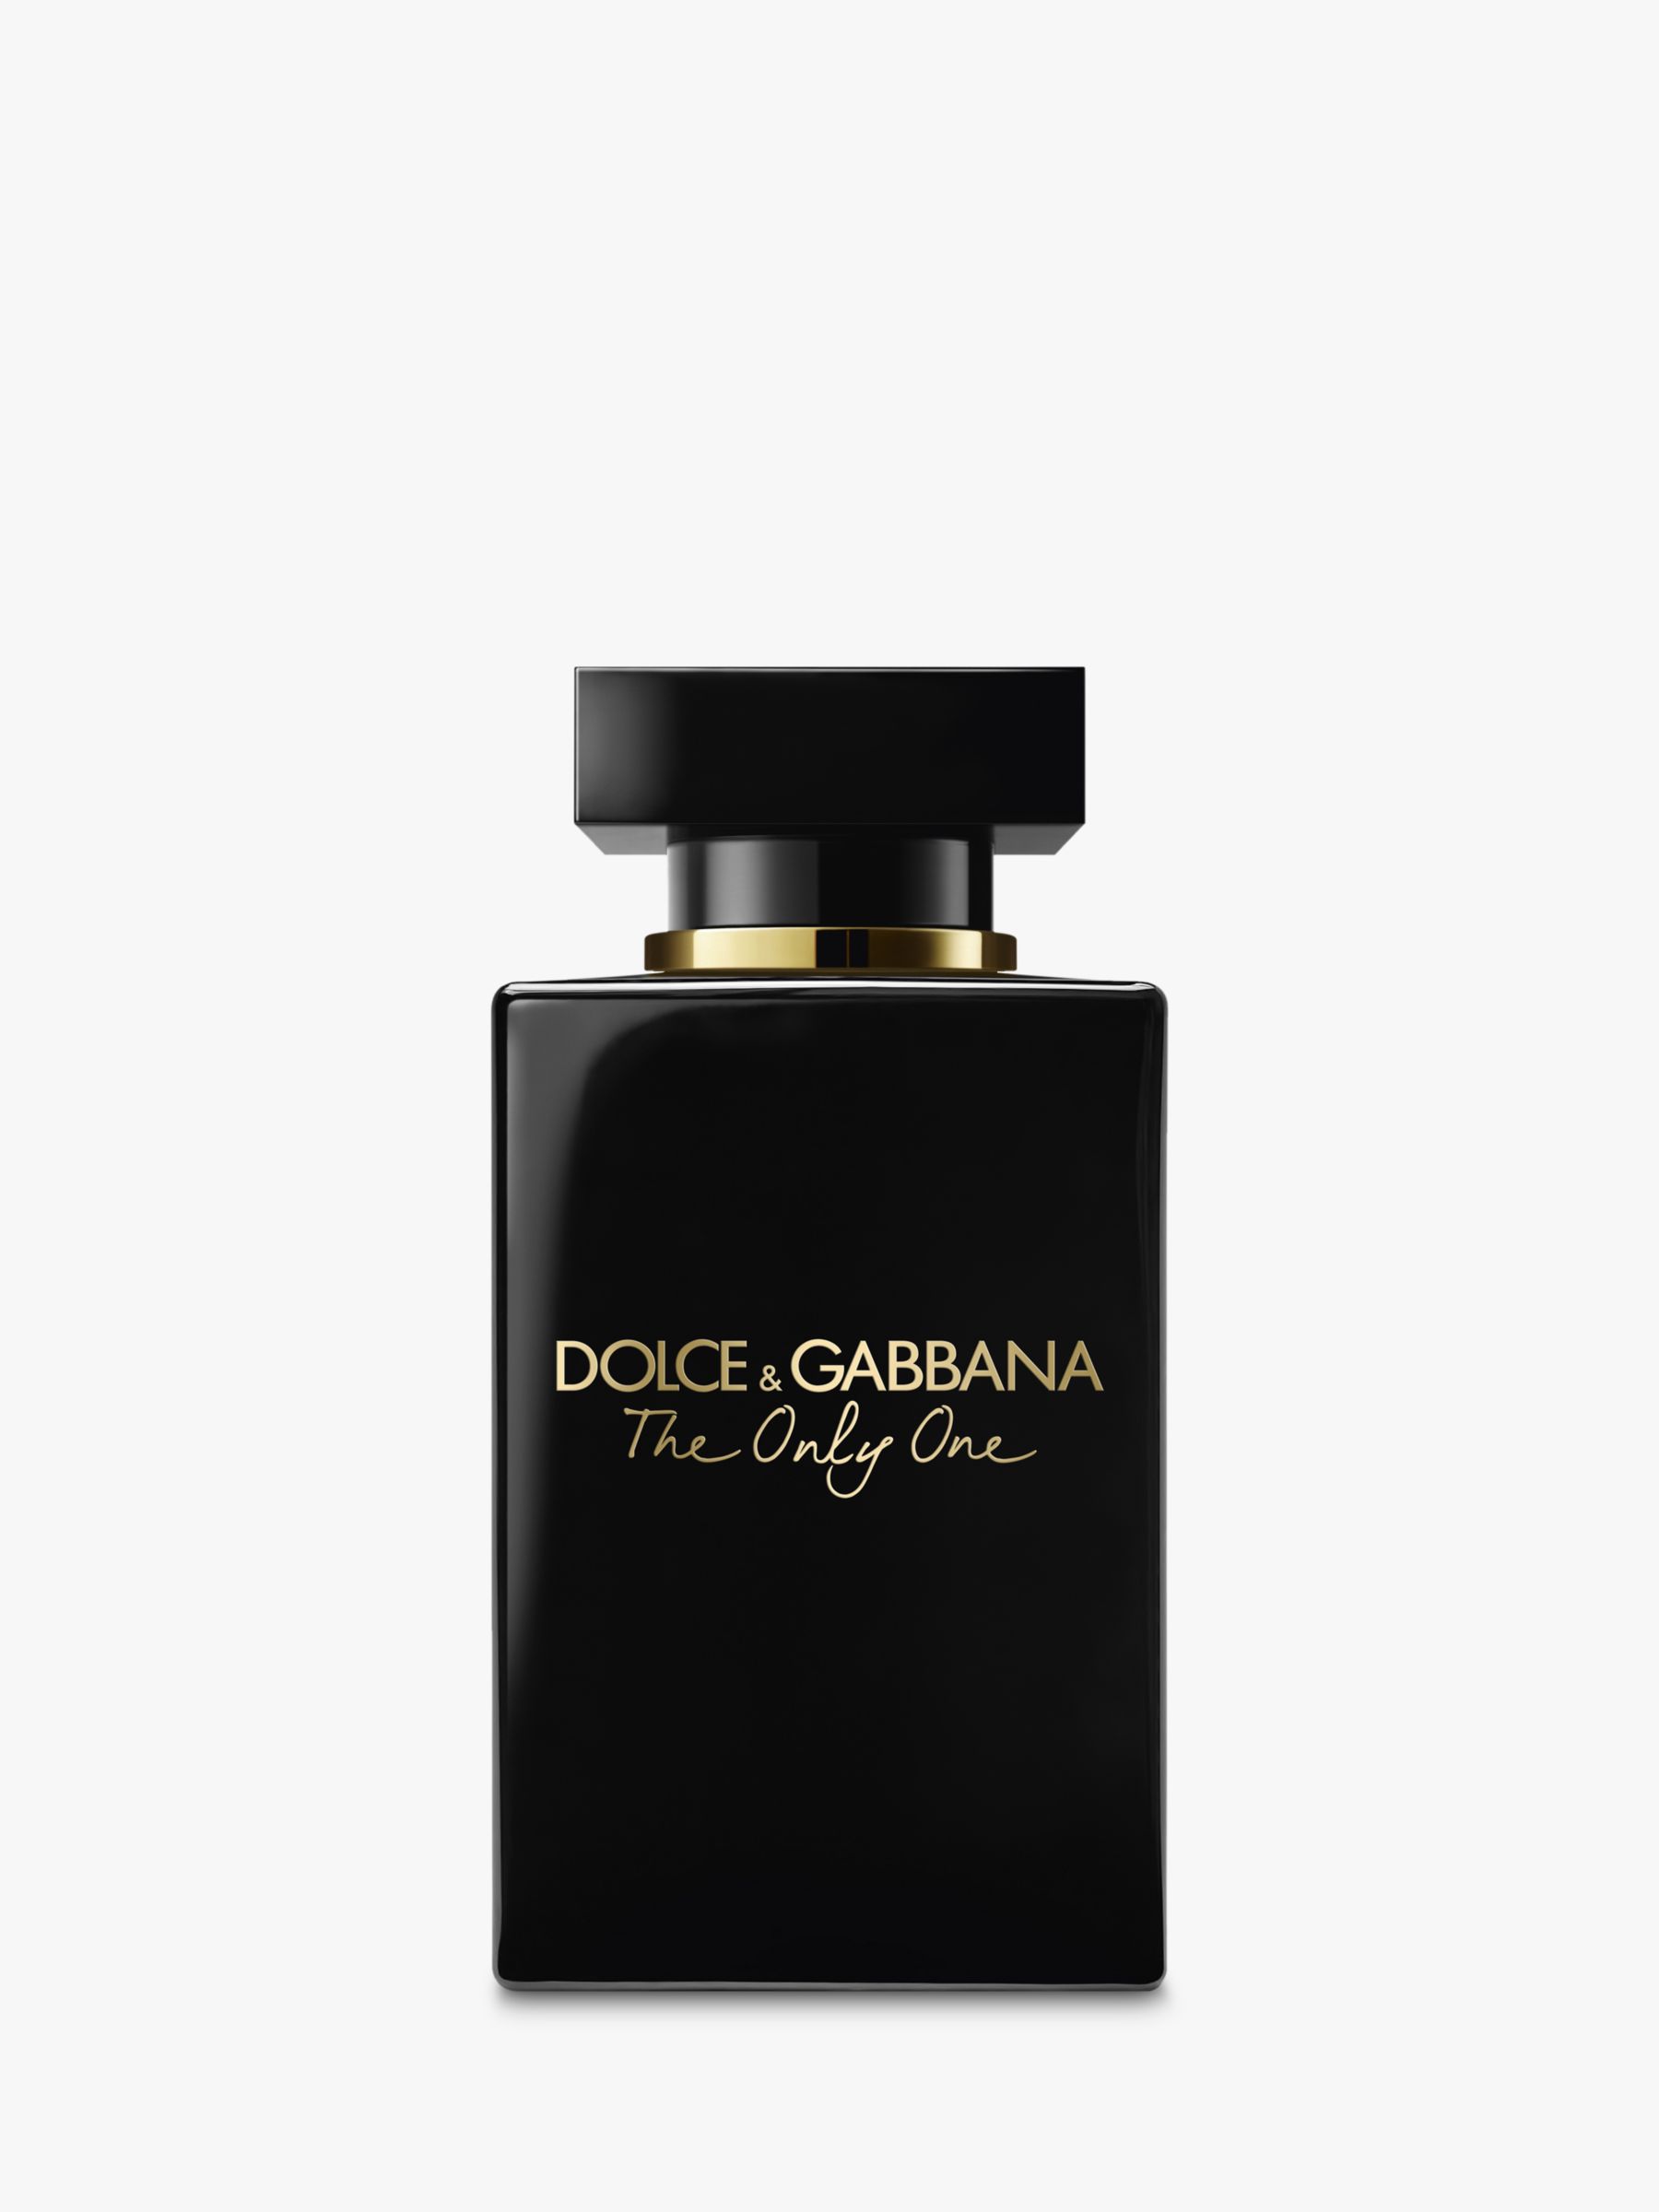 Dolce & Gabbana The Only One Eau de Parfum Intense, 100ml at John Lewis ...